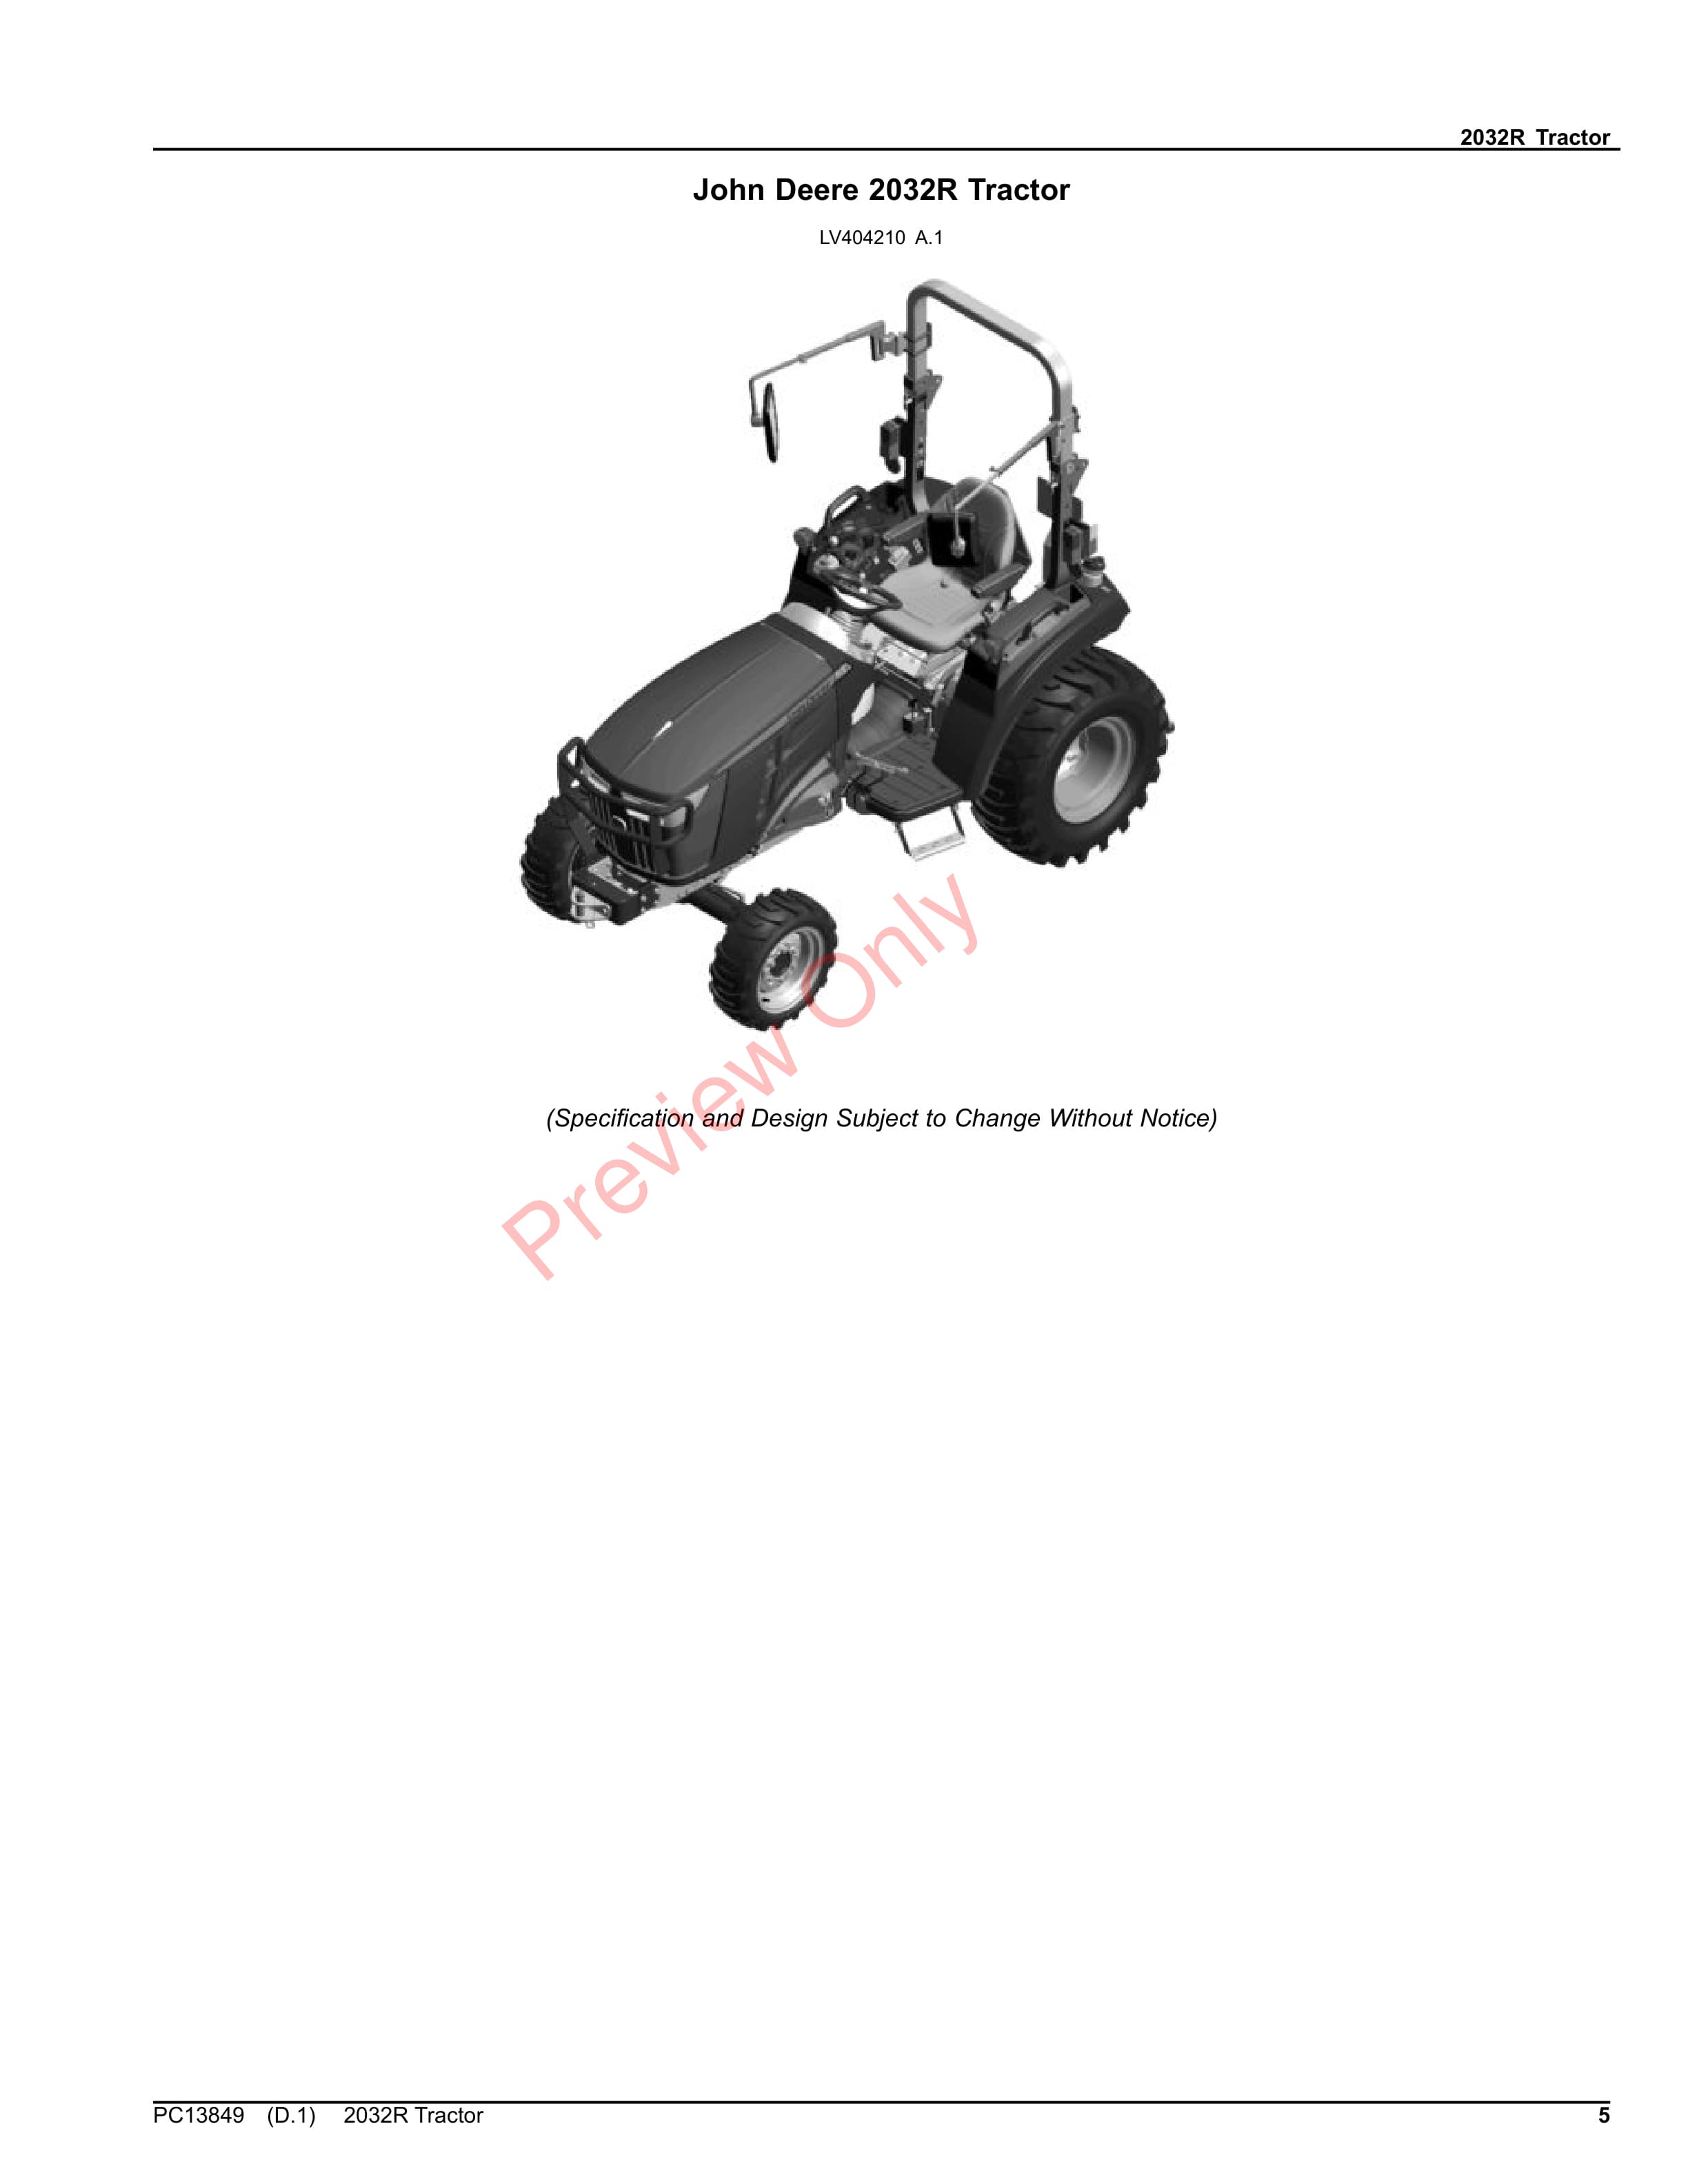 John Deere 2032R Tractor Parts Catalog PC13849 13AUG23-5